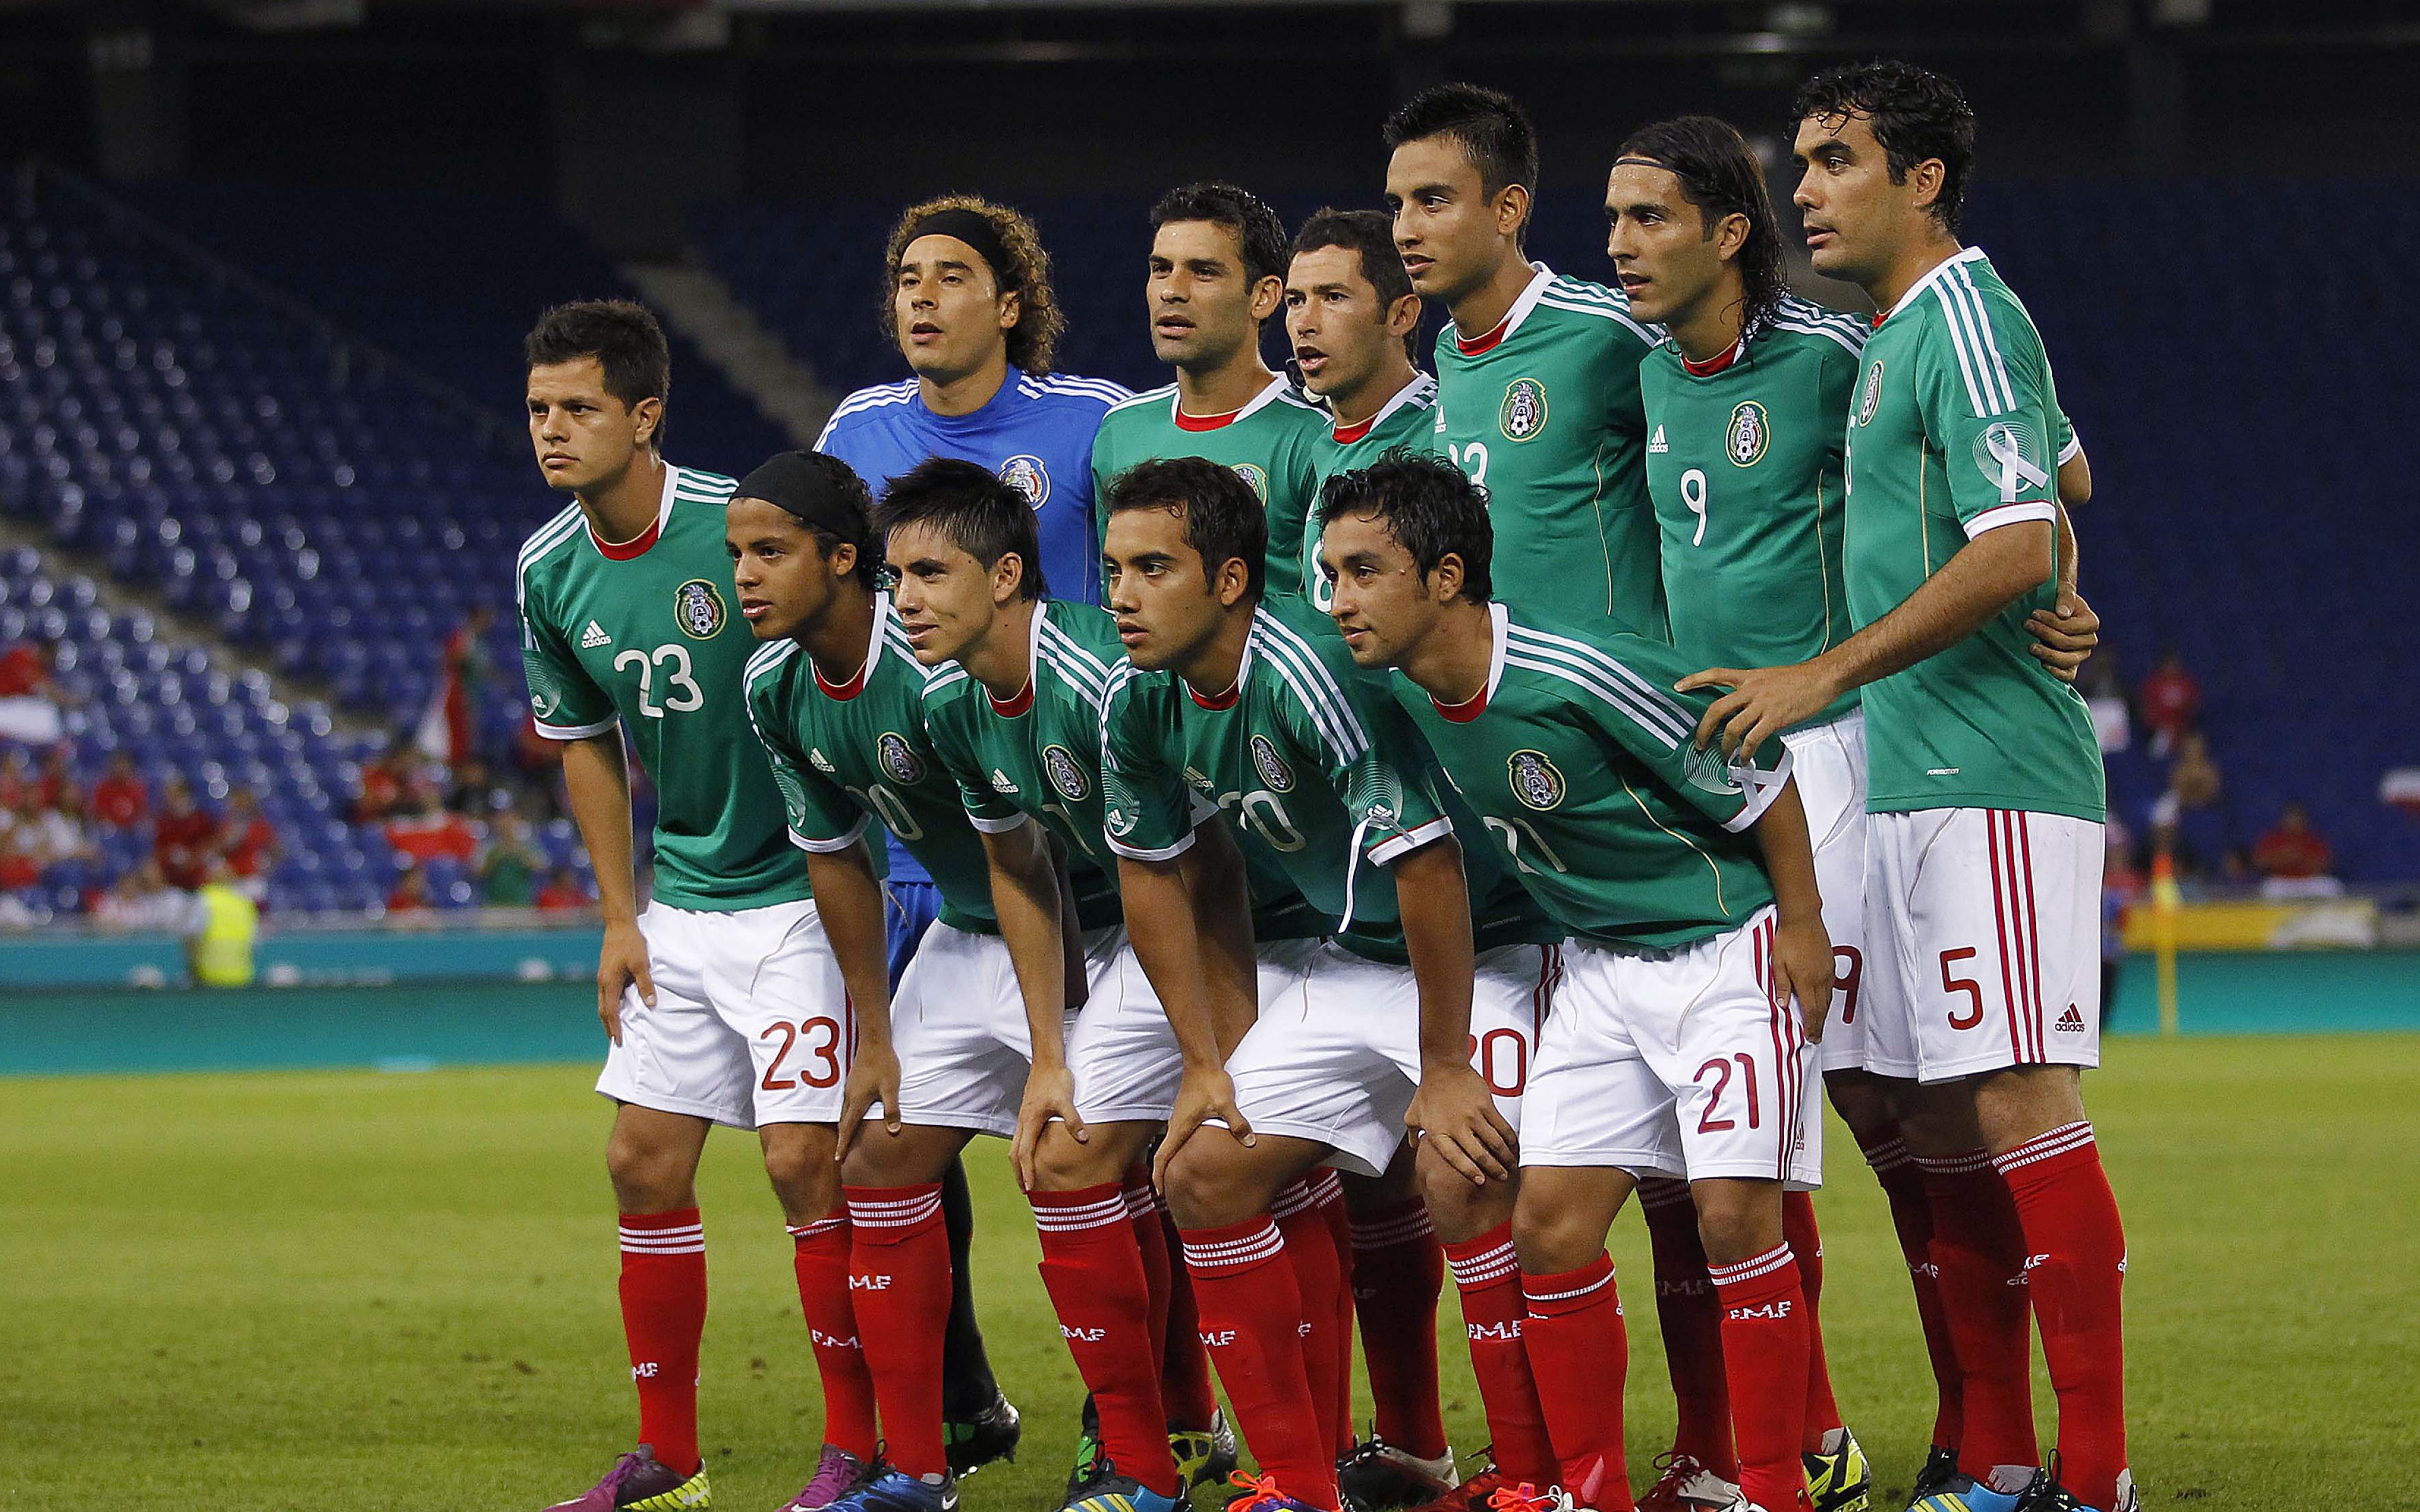 Download Wallpaper 3840x2400 Mexico vs chile, Football, 2015